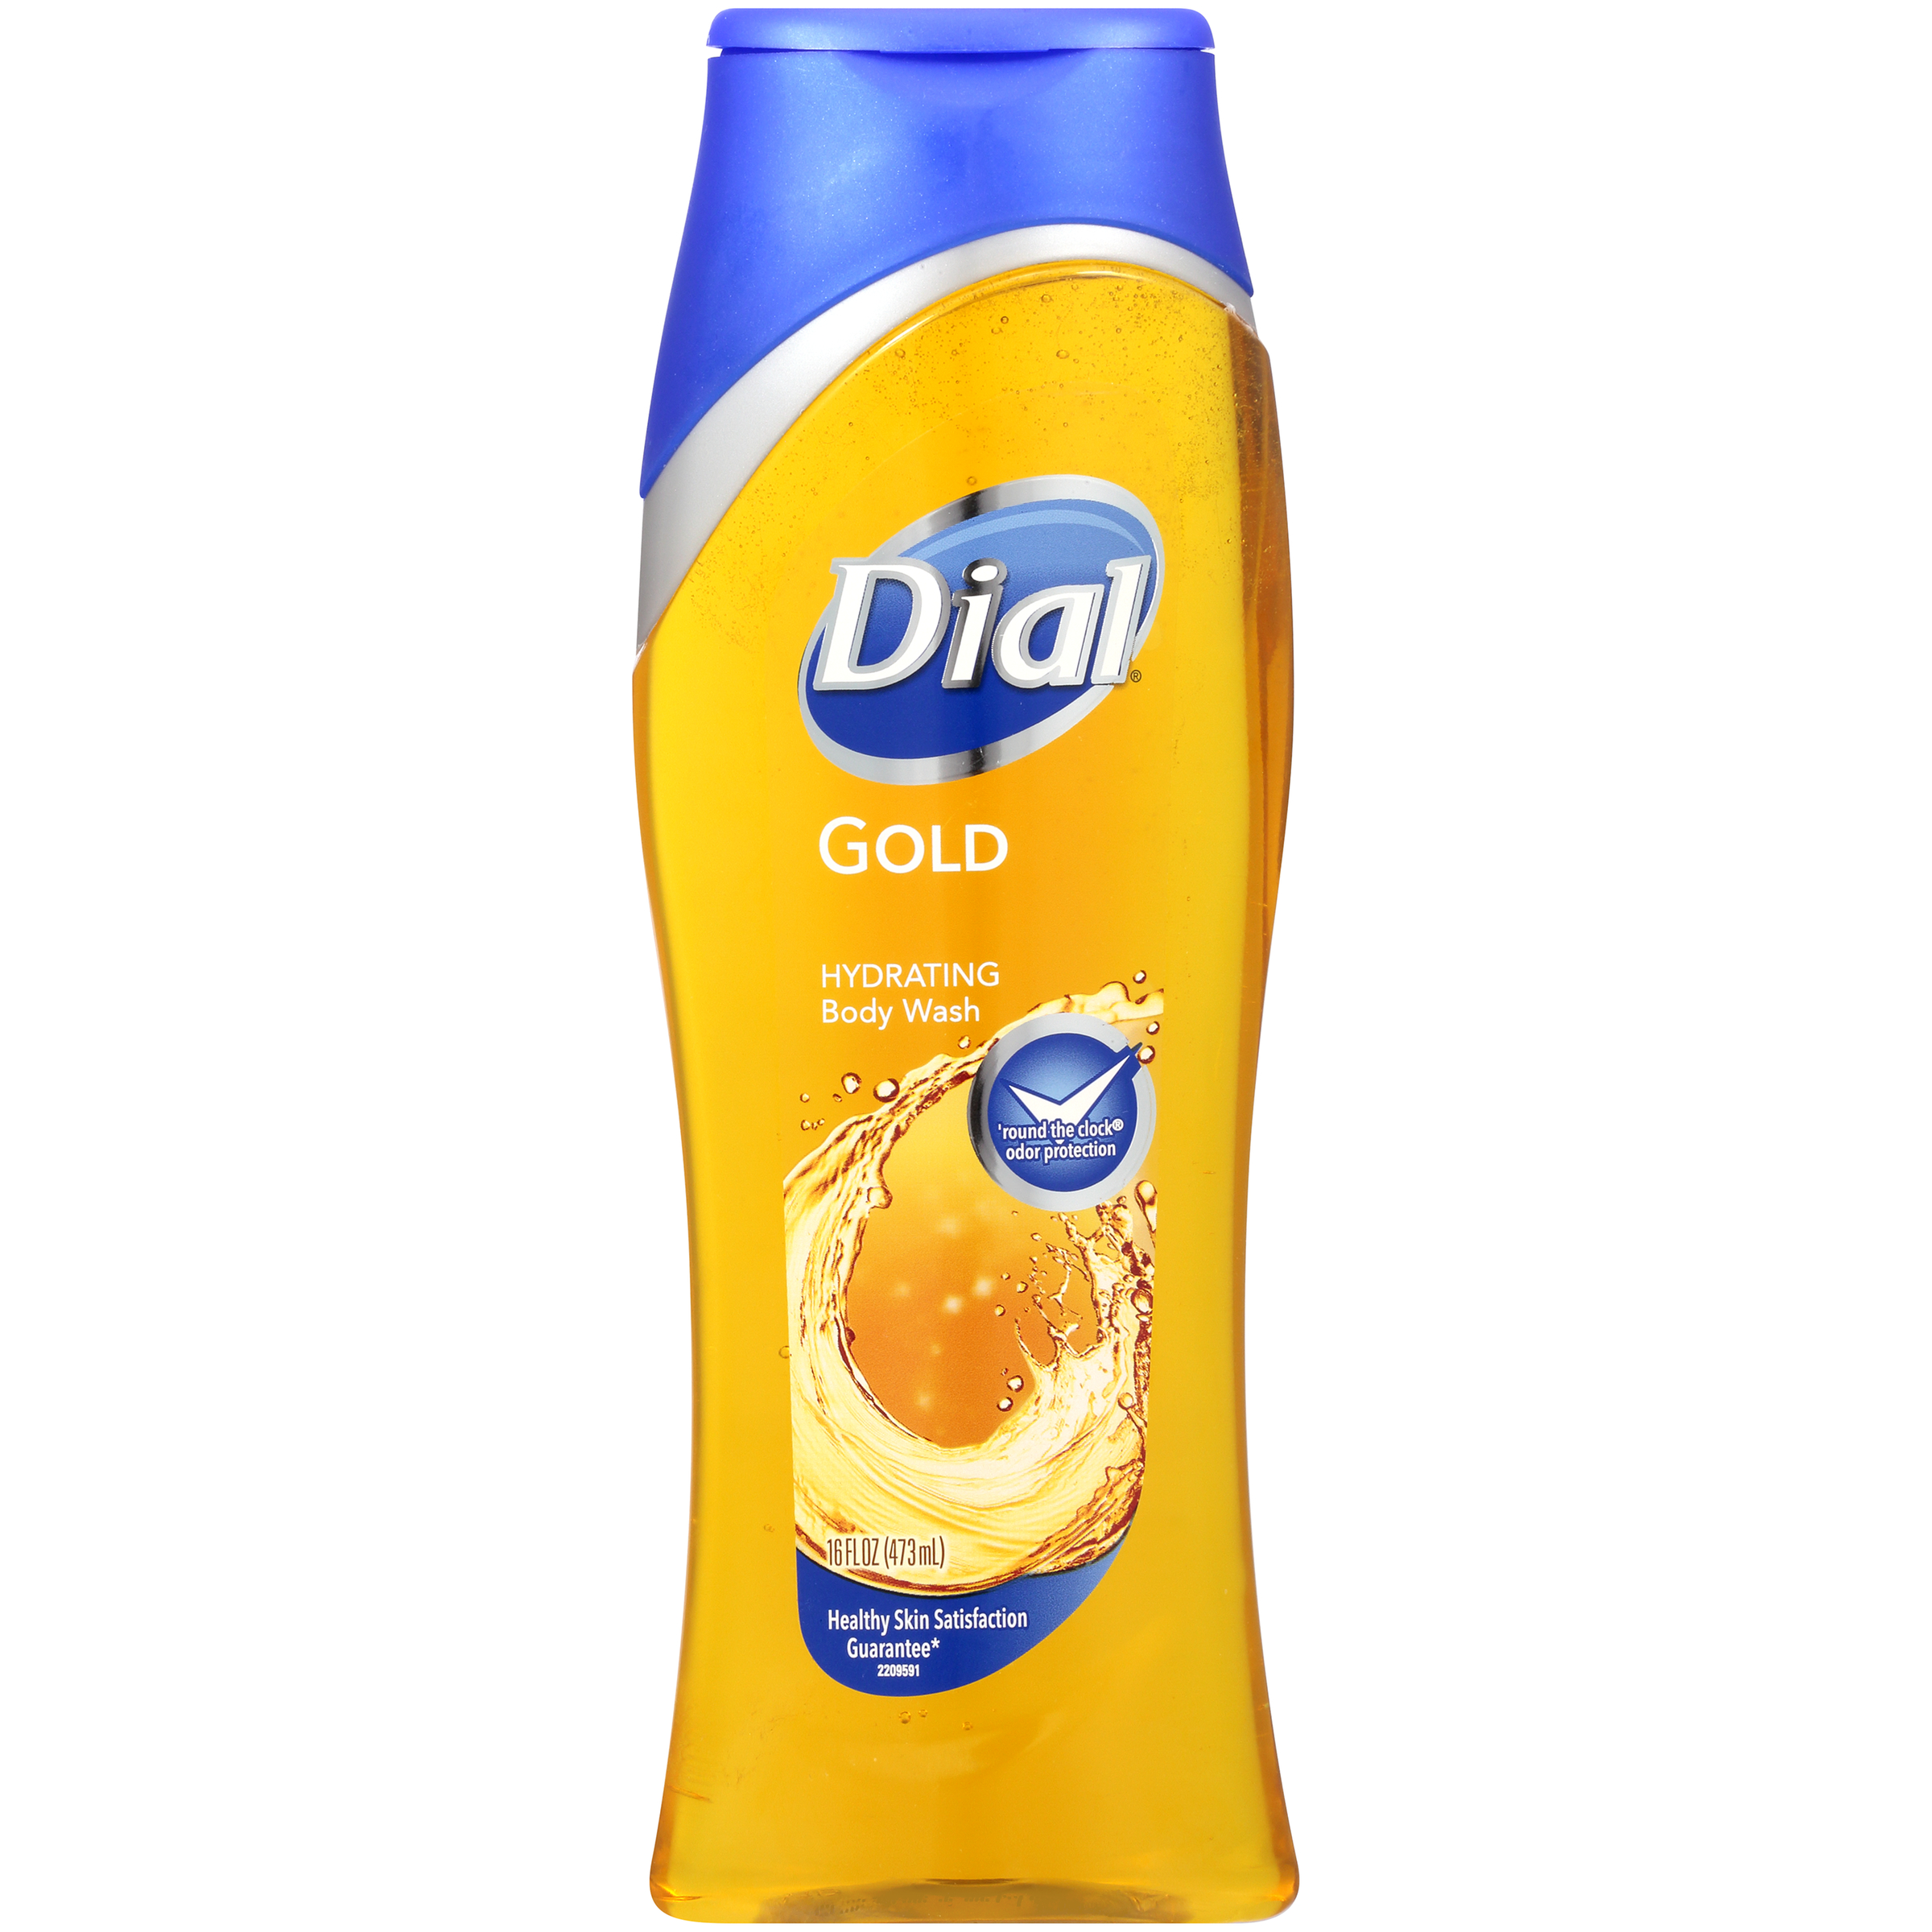 Dial Gold Deodorizing Body Wash 16 fl oz